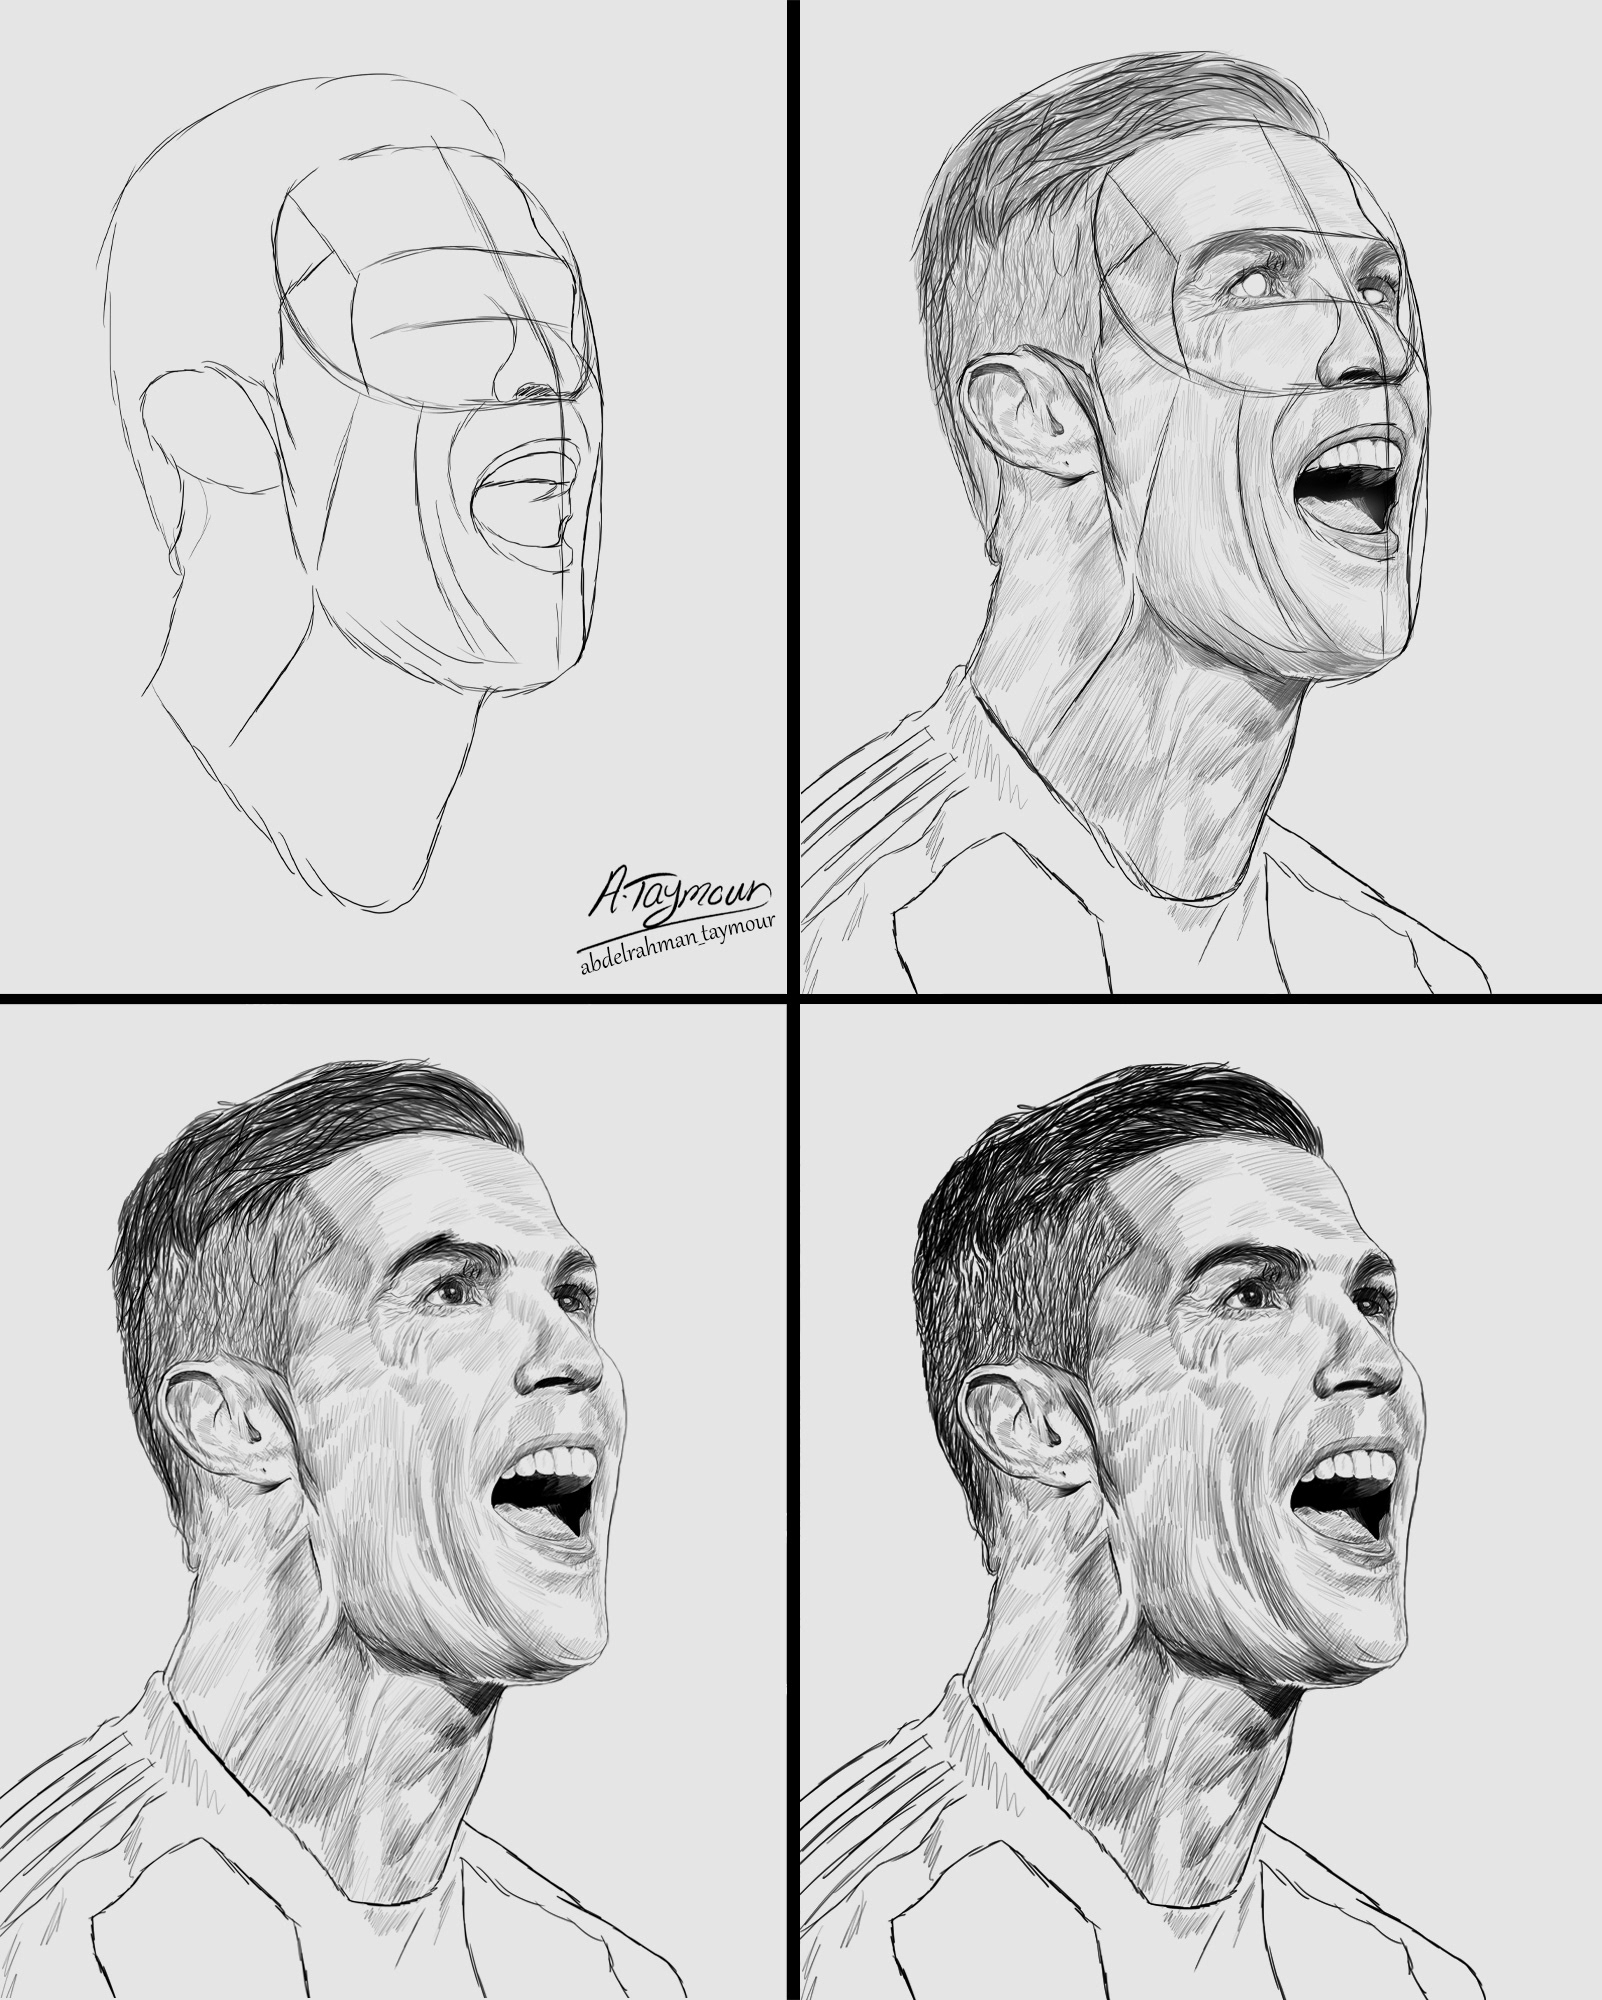 Buy Sketch of Cristiano Ronaldo Online India- India's #1 Creative  Marketplace - Artkafe